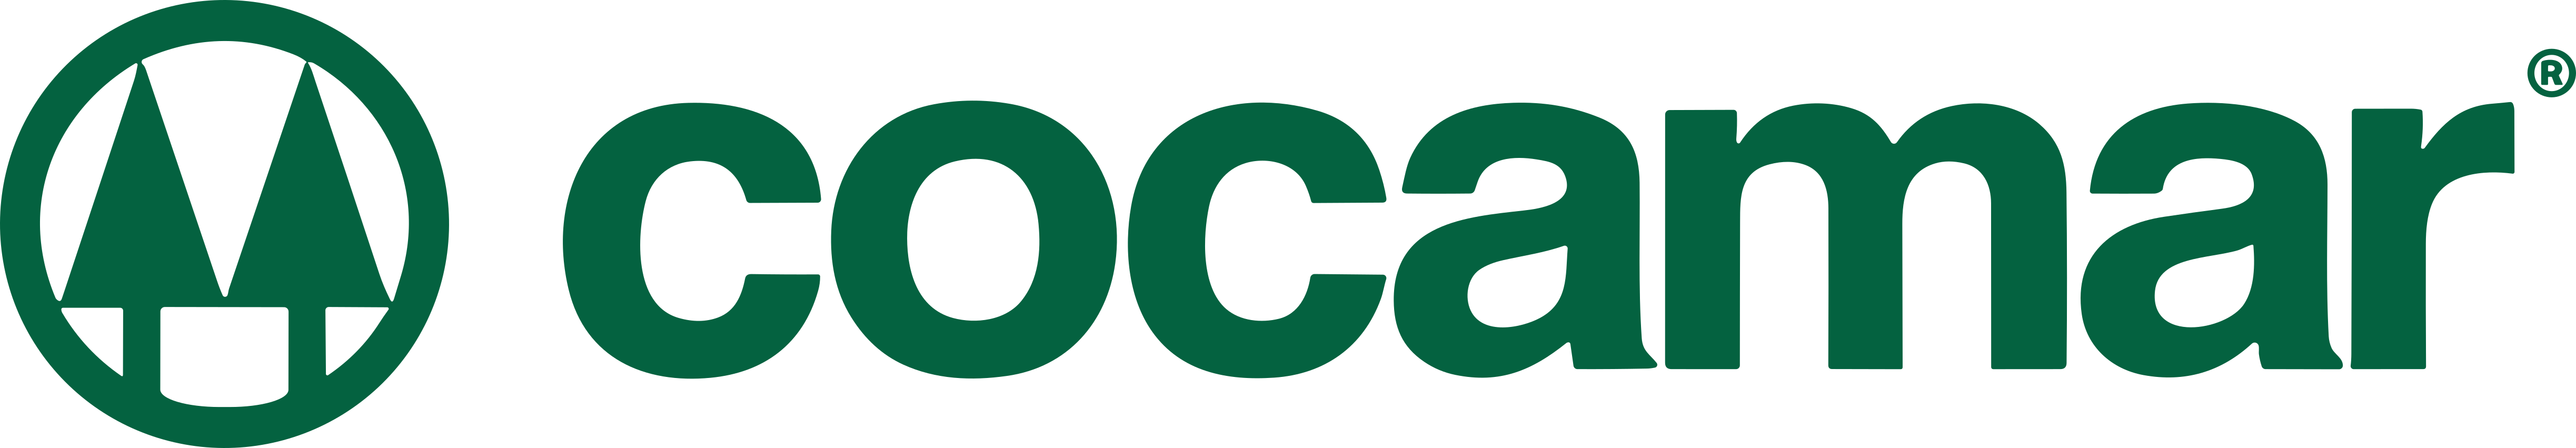 Logo Cocamar